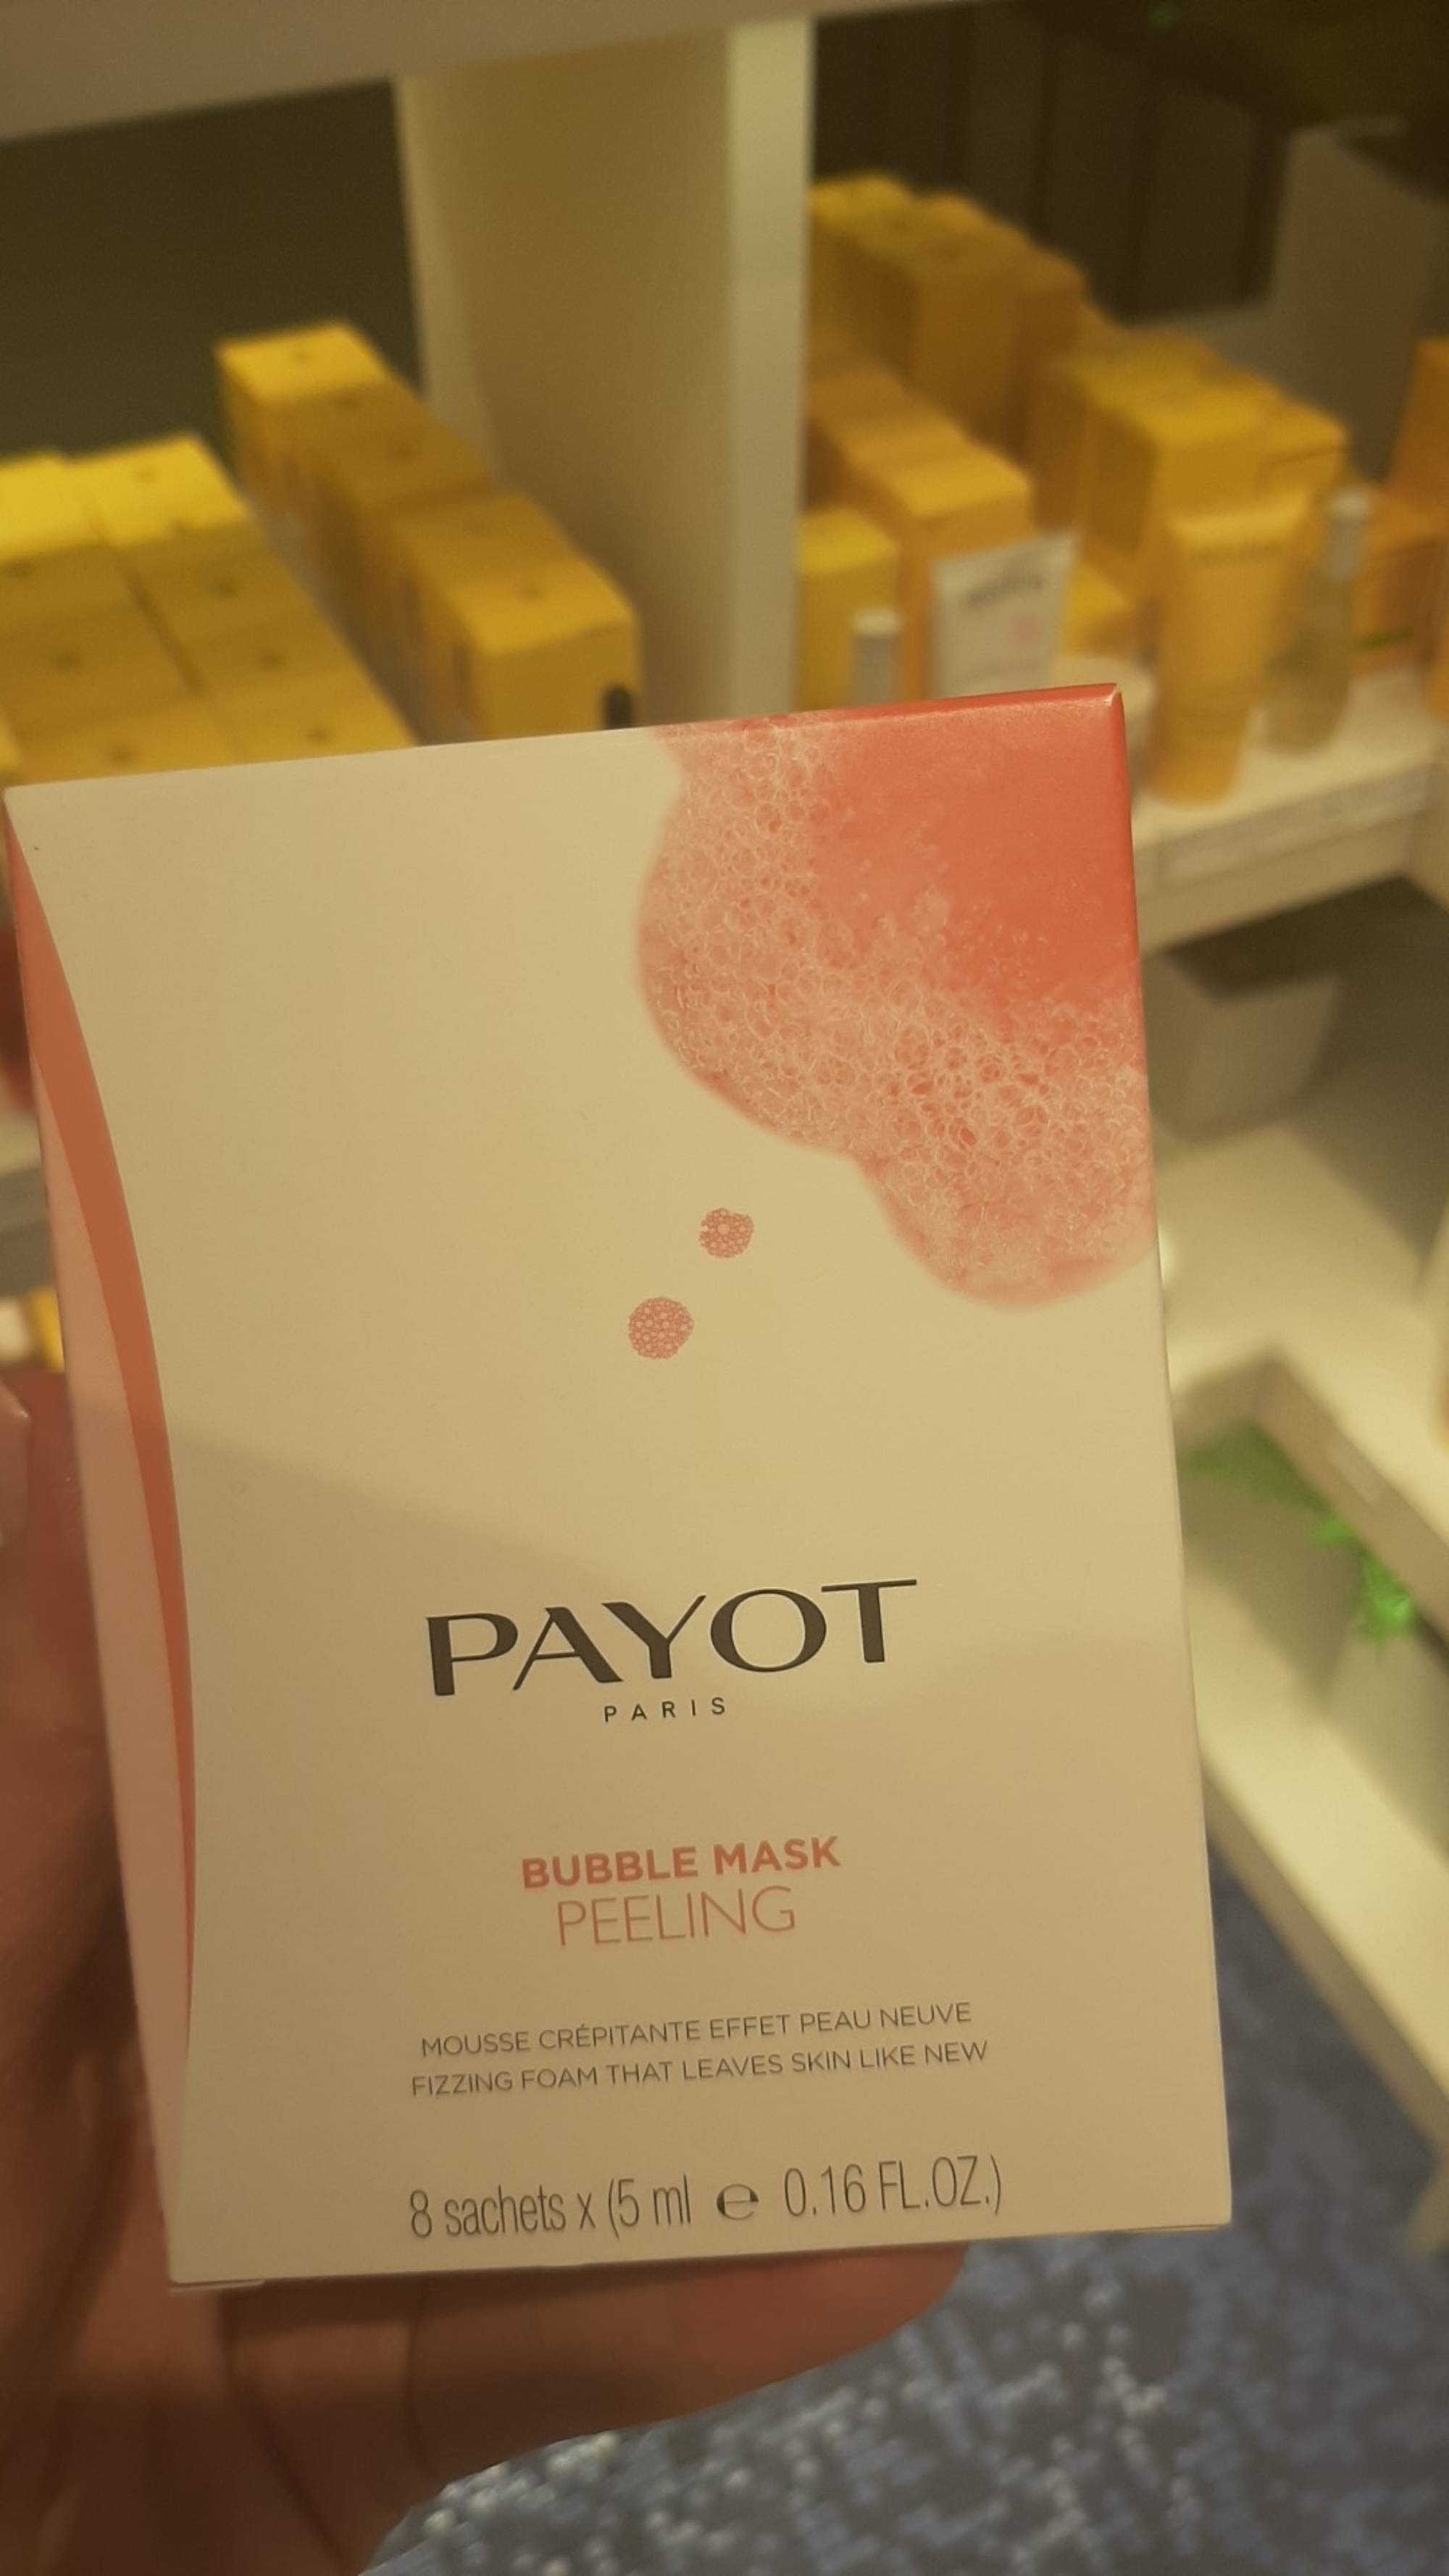 PAYOT - Bubble mask peeling